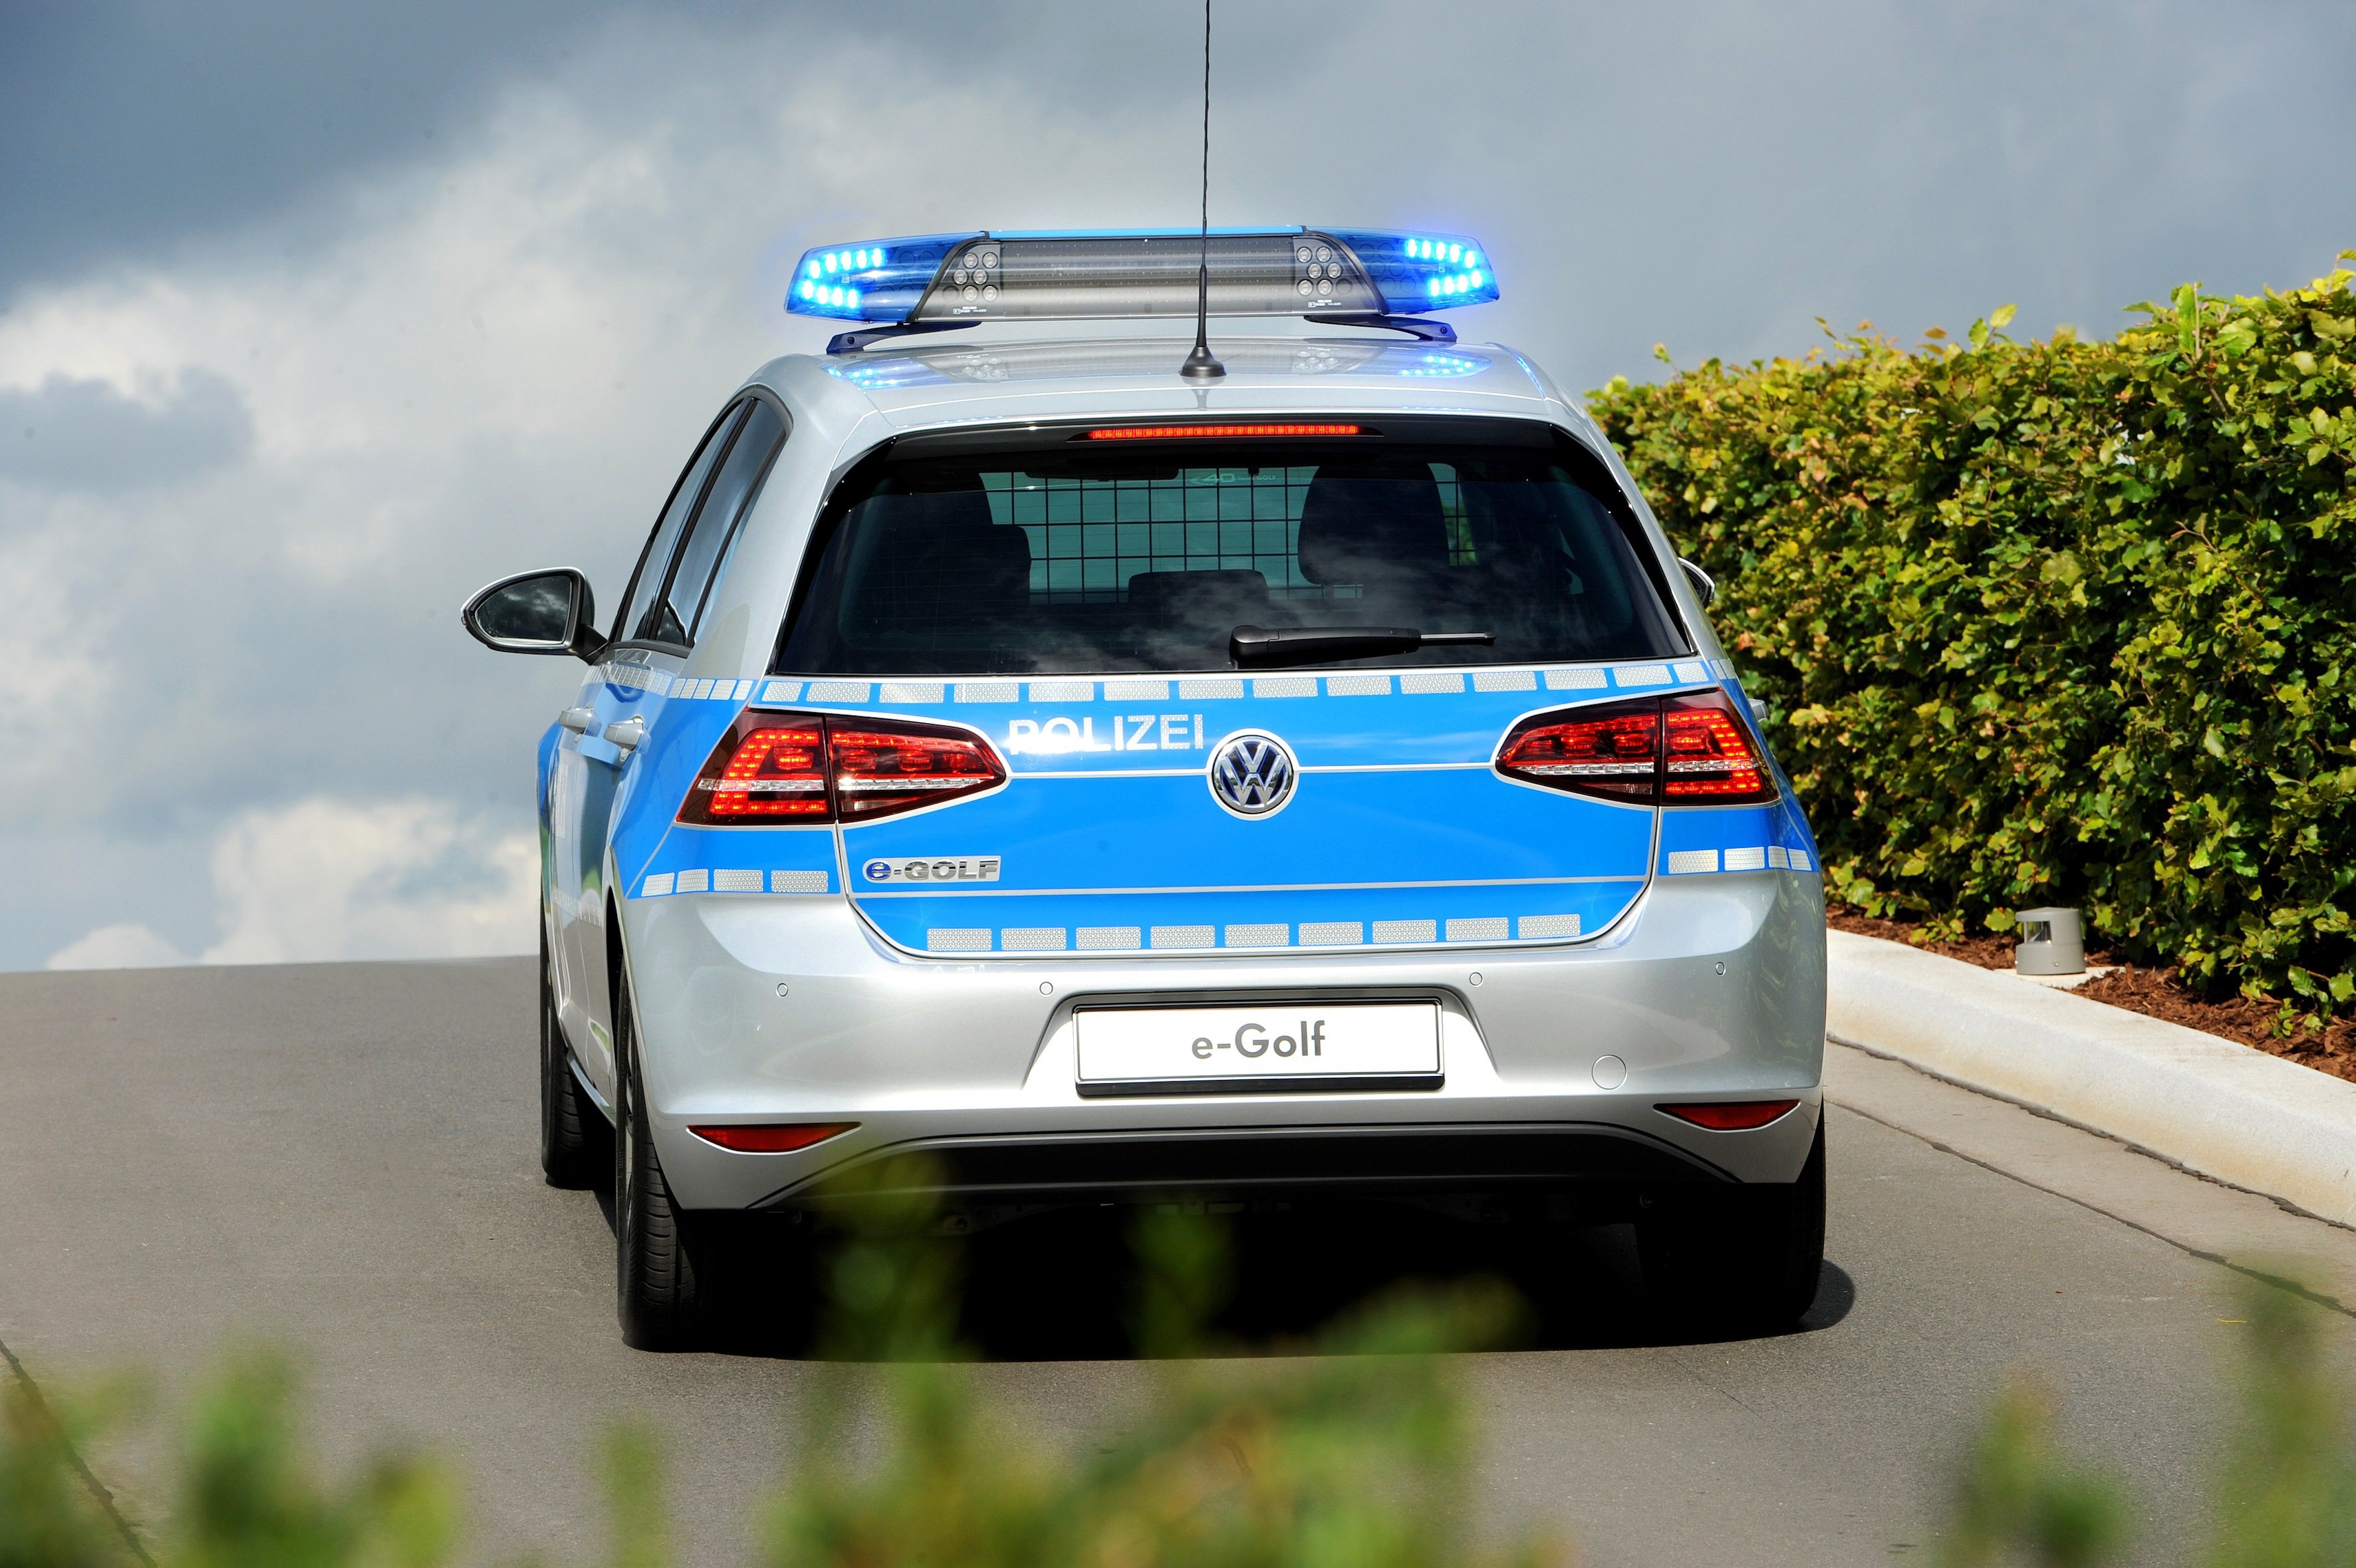 2014, Volkswagen, E golf, Polizei, Electric, Police, Emergency Wallpaper